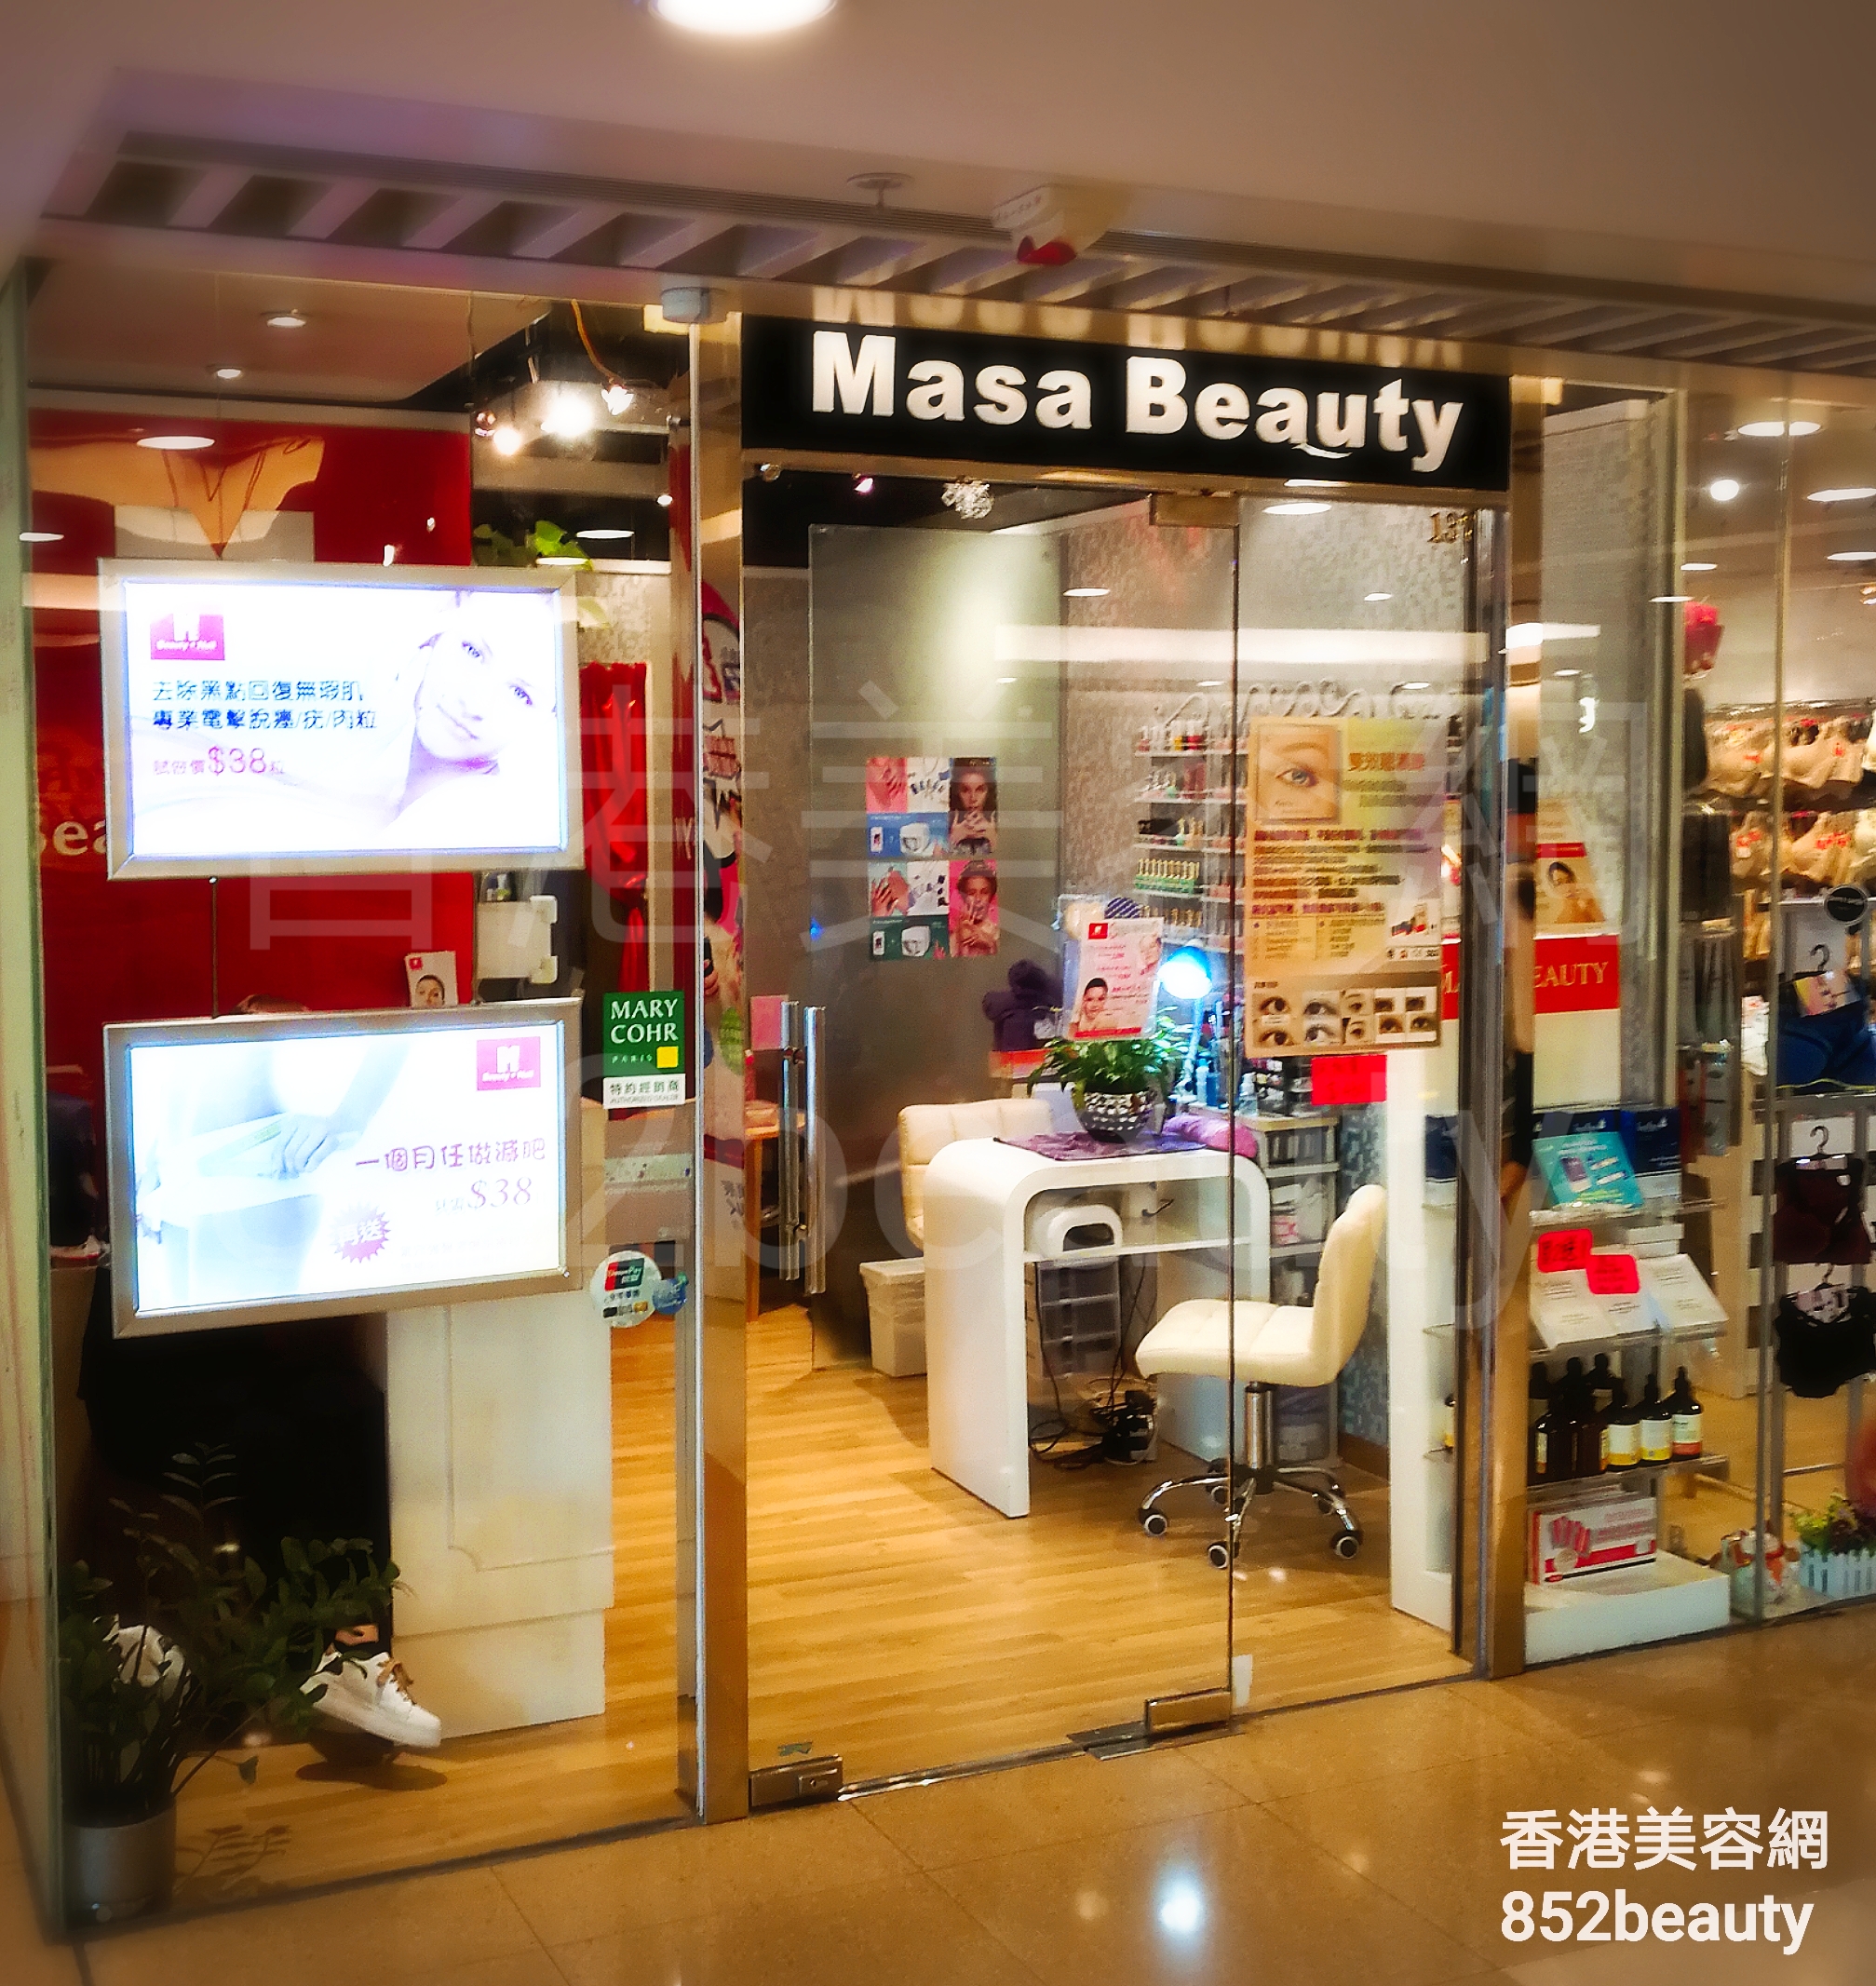 Hand and foot care: Masa Beauty